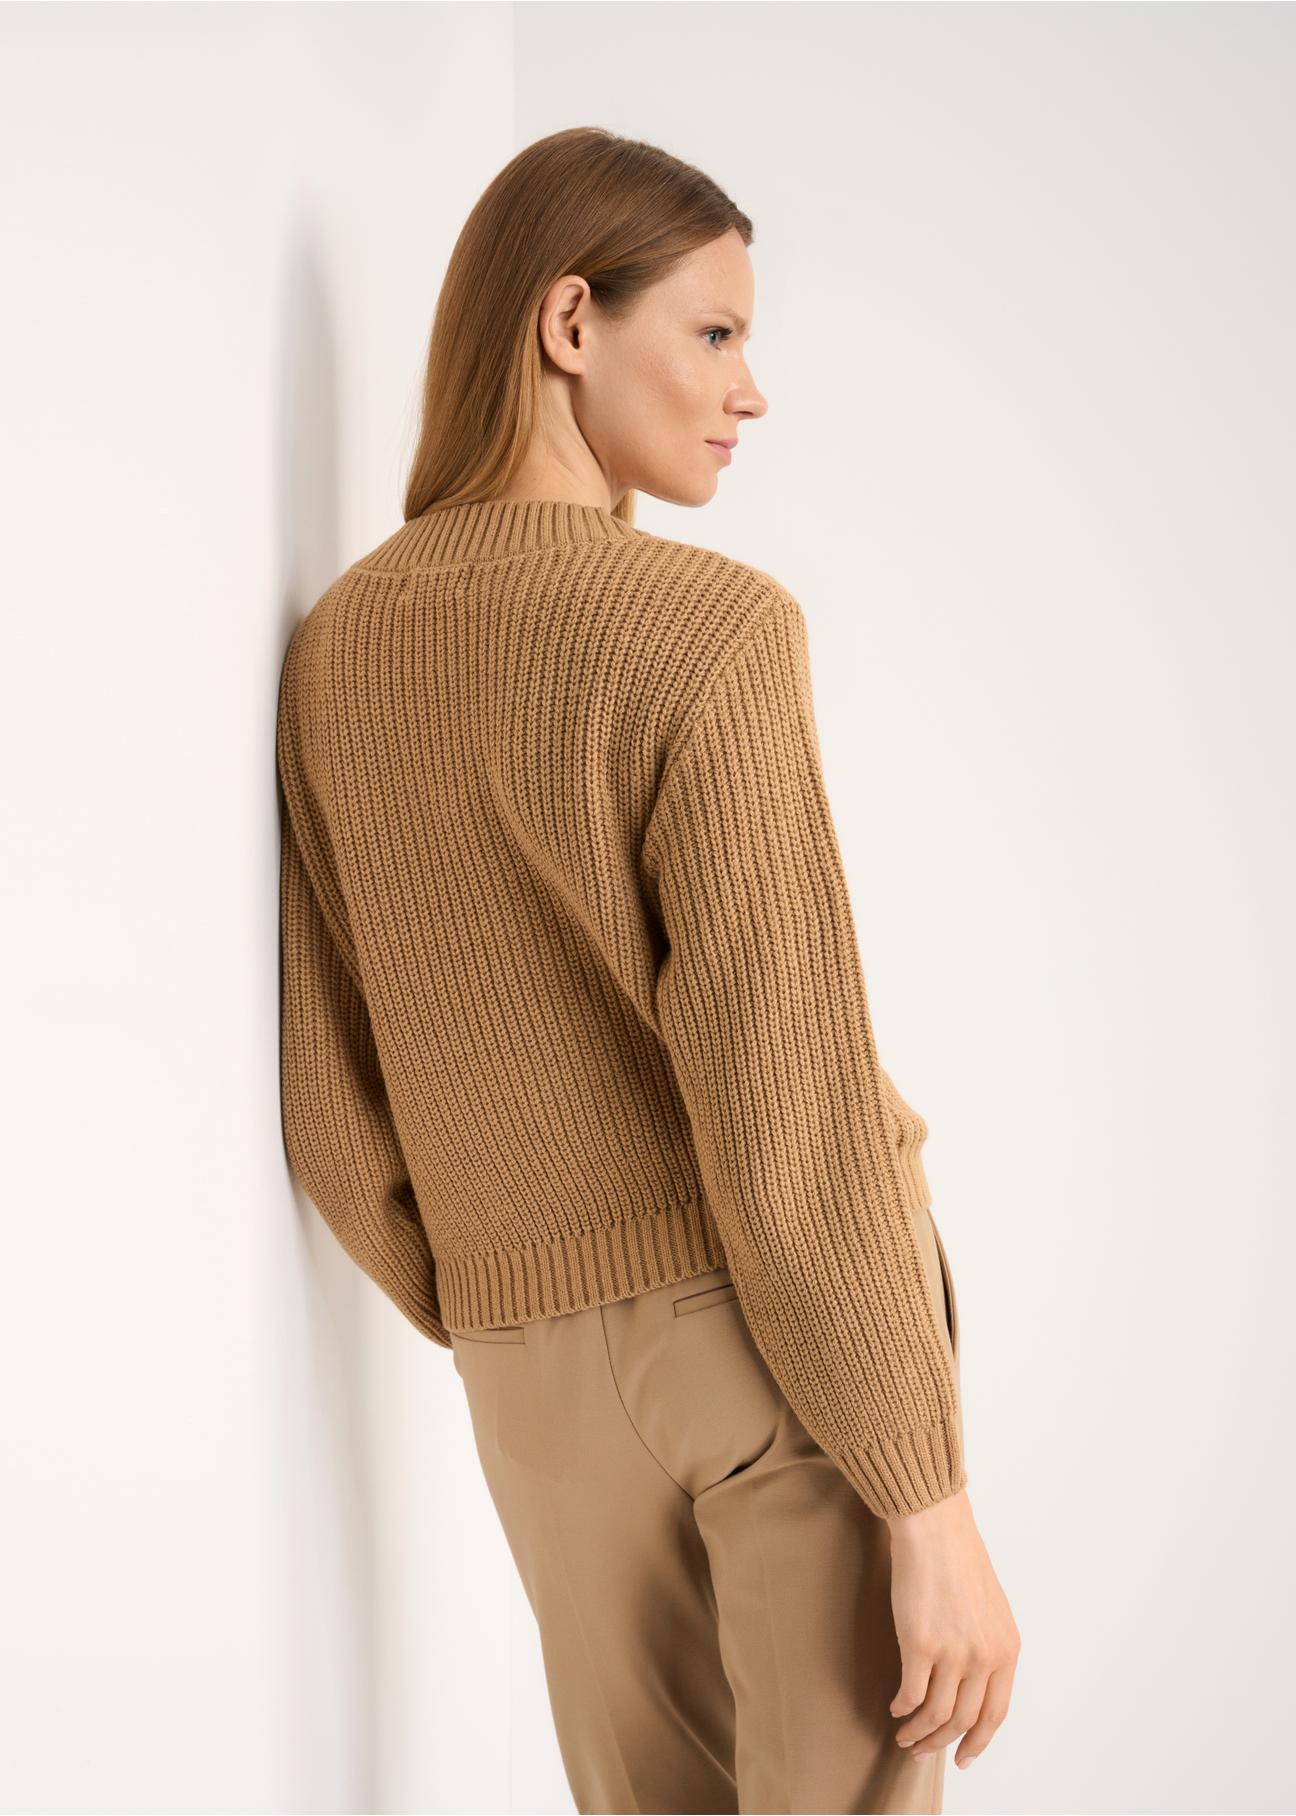 Beżowy sweter dekolt V damski SWEDT-0162-81(Z22)